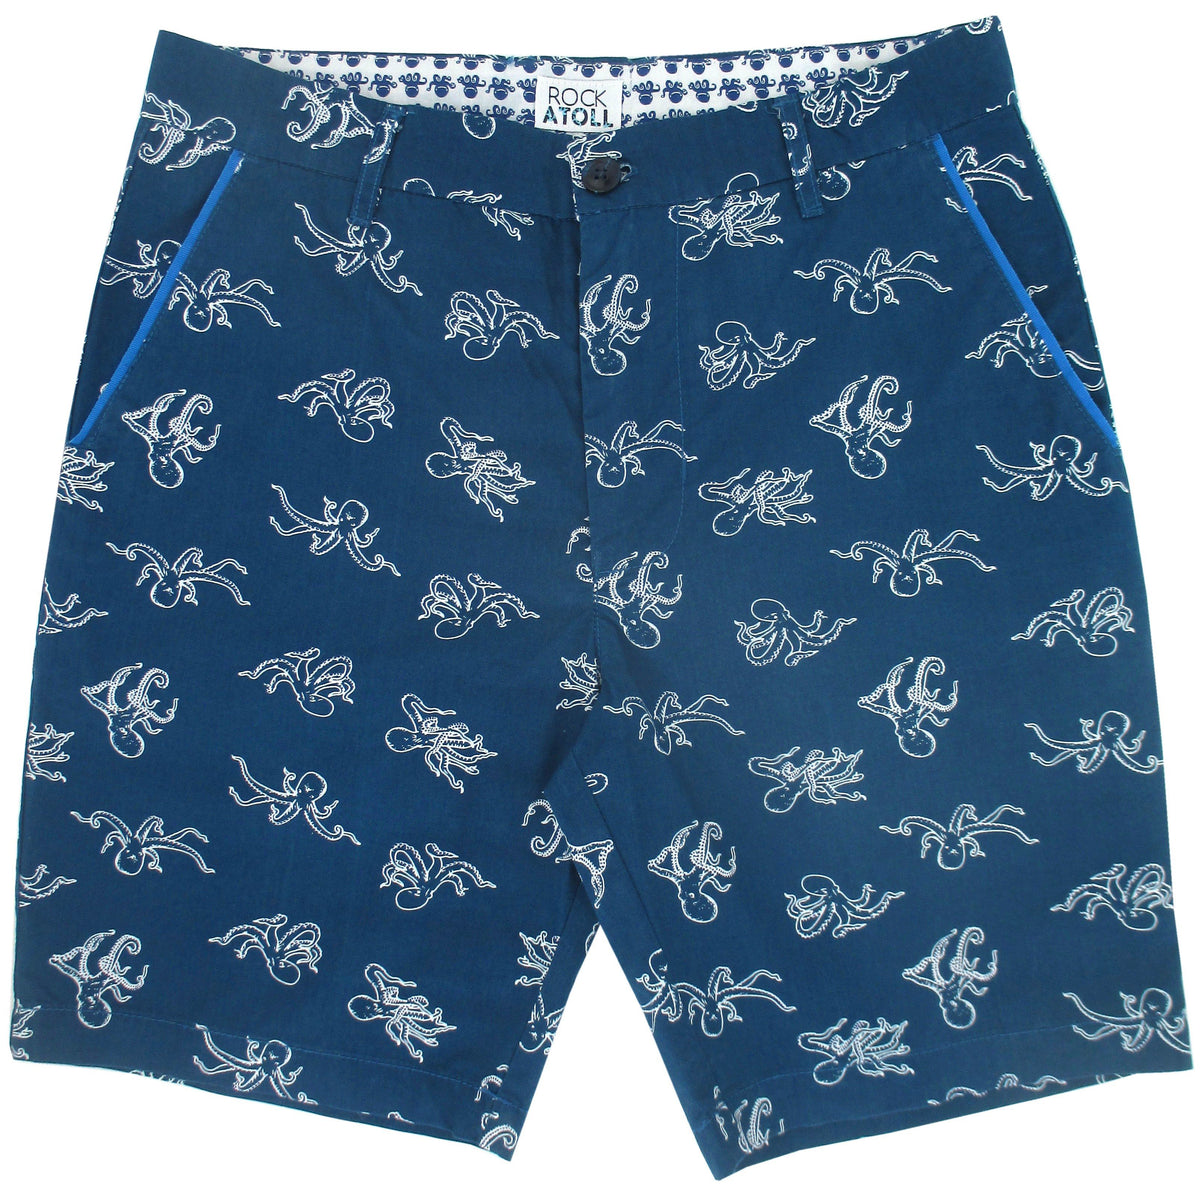 Octopus Shorts For Men. Buy Awesome Mens Octopi Shorts Online